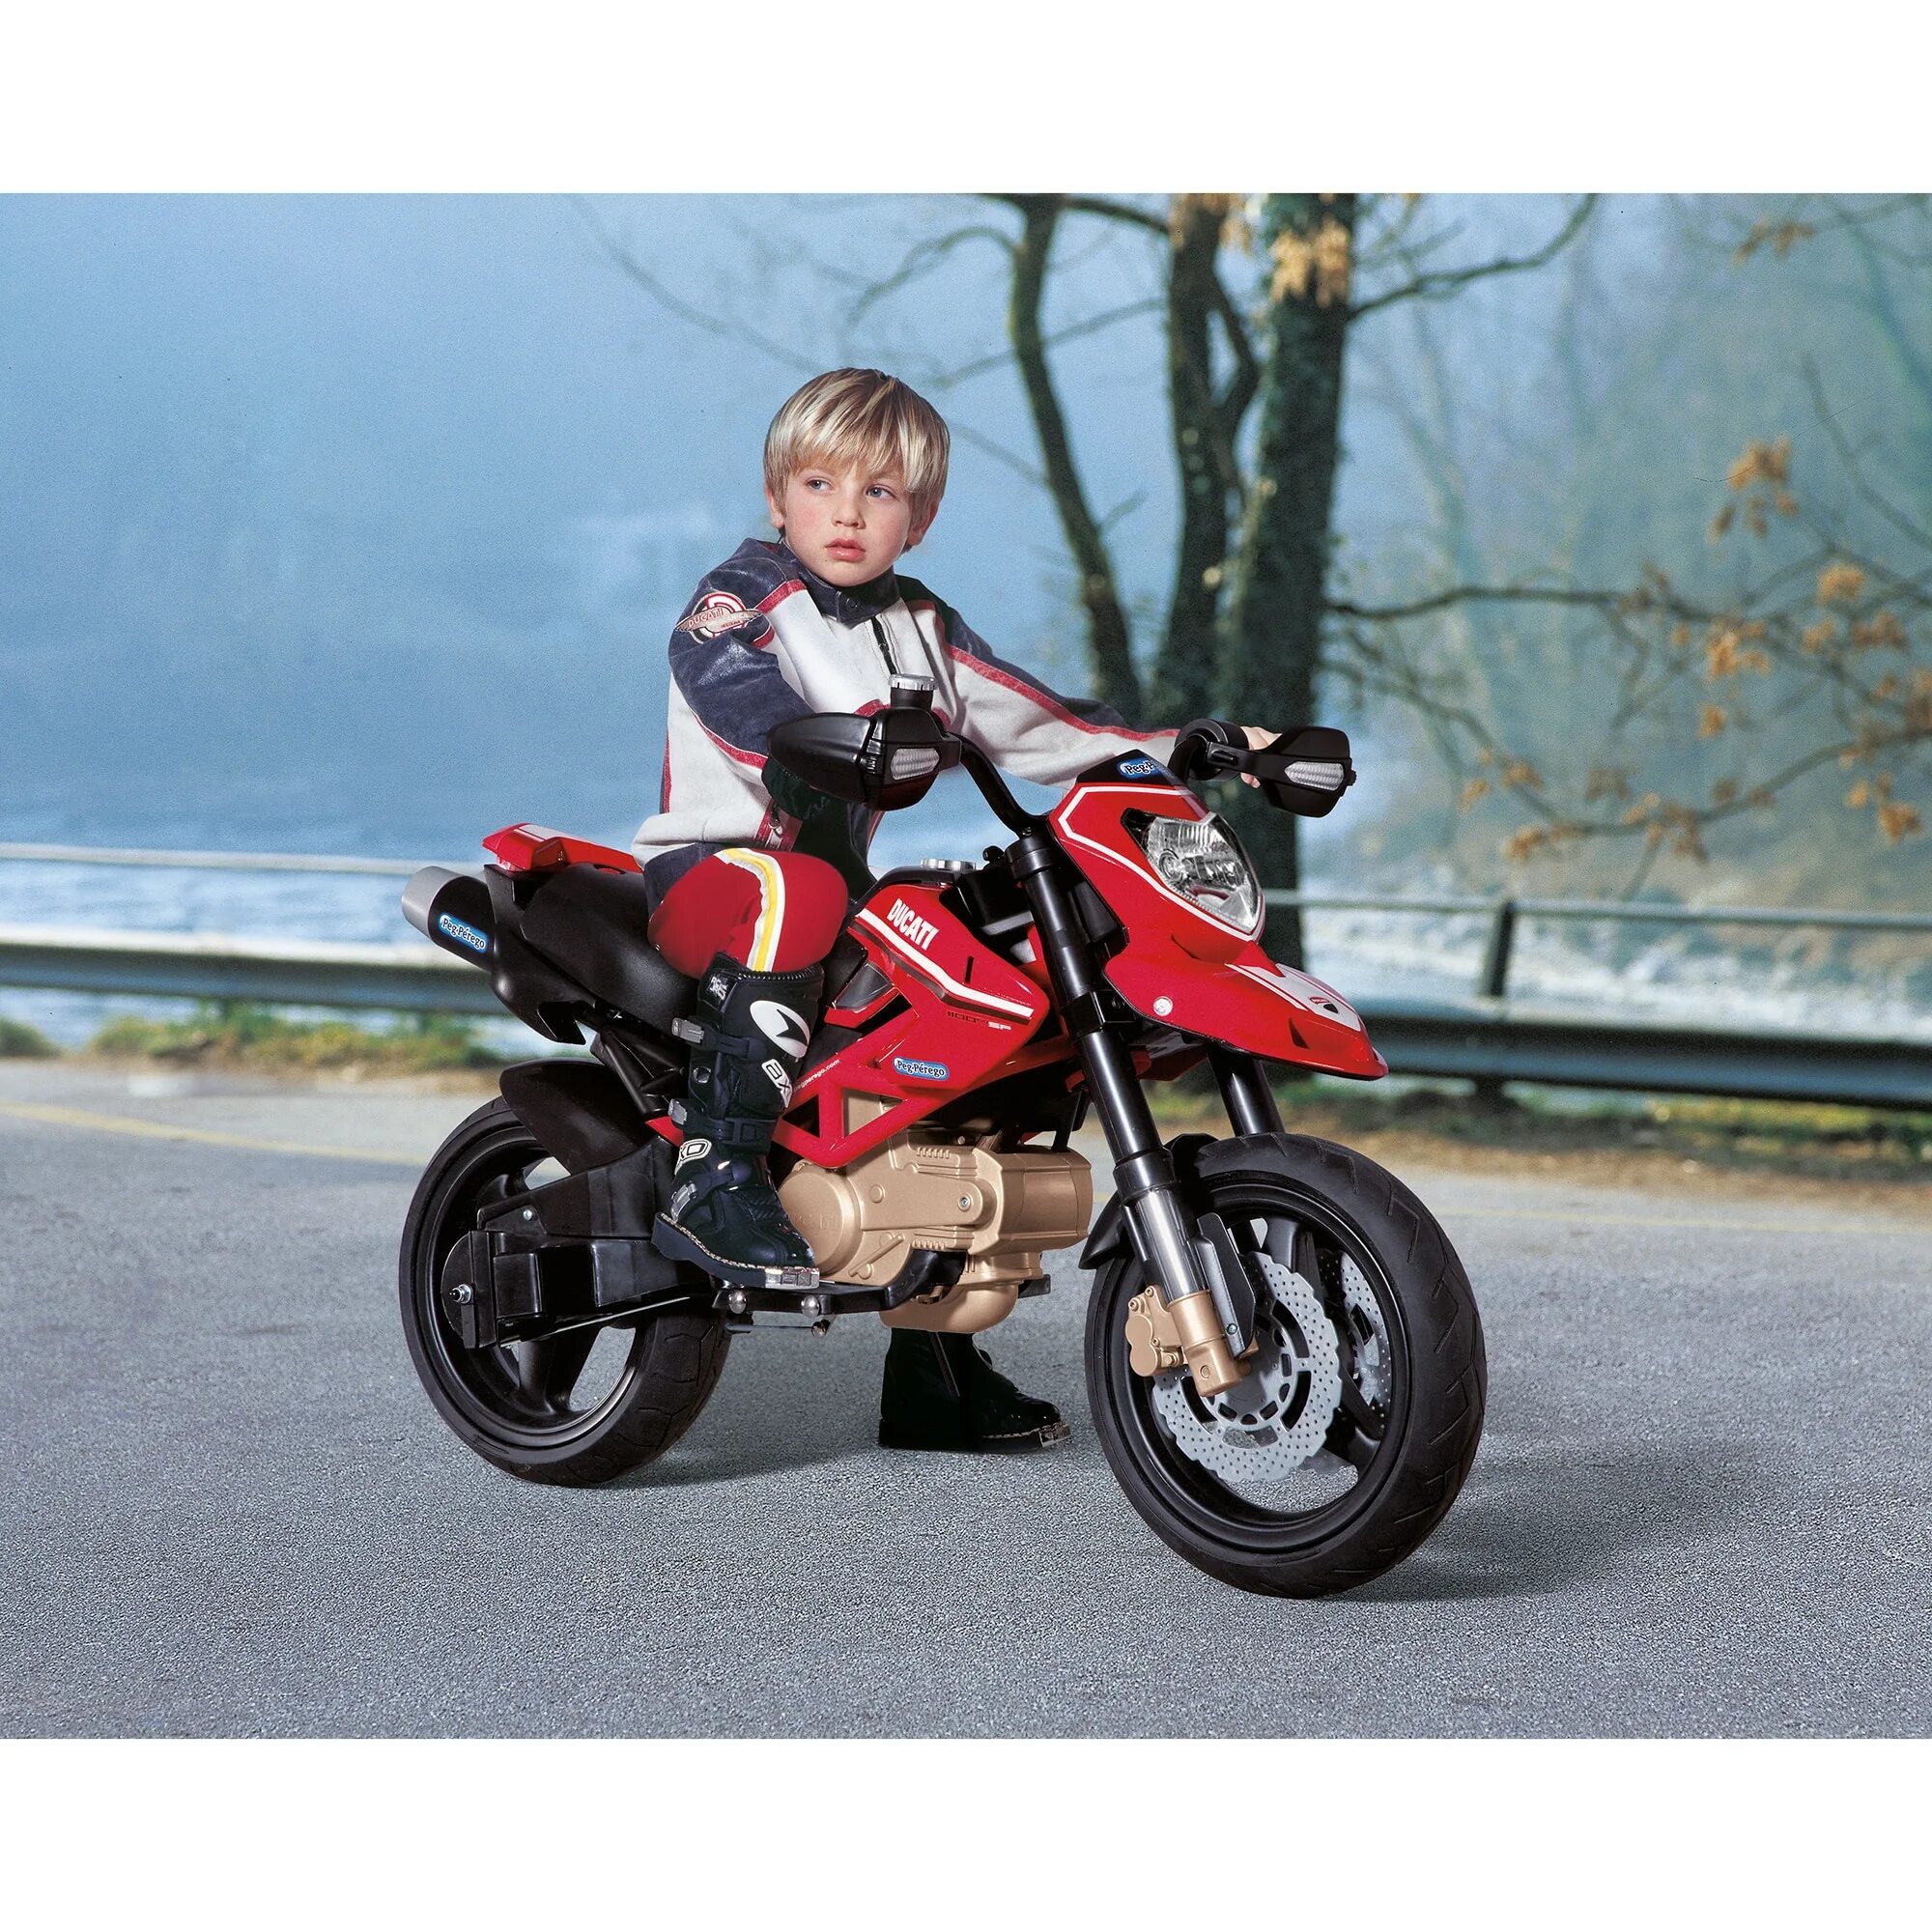 Ducati Peg Perego мотоцикл. Peg Perego Ducati Hypermotard. Детский электромотоцикл Peg-Perego Ducati Enduro. Маленький Дукати мотоцикл. Мопед в 14 лет можно ли